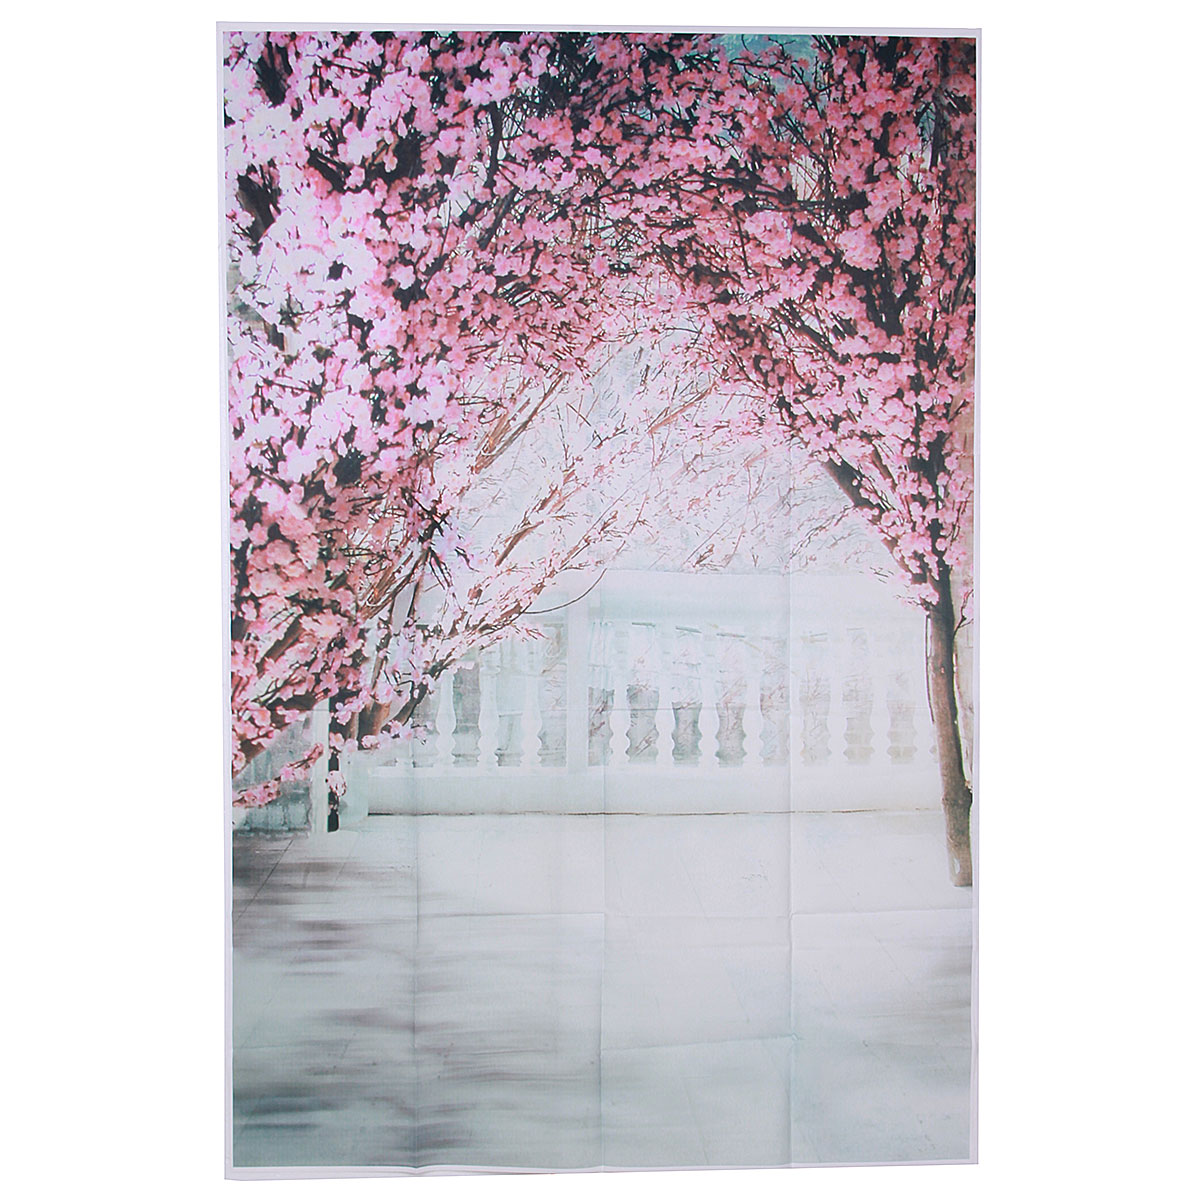 

1x1.5m 3x5ft шелк хлопок вишня персик цветы винил фото студия фоном фон реквизита